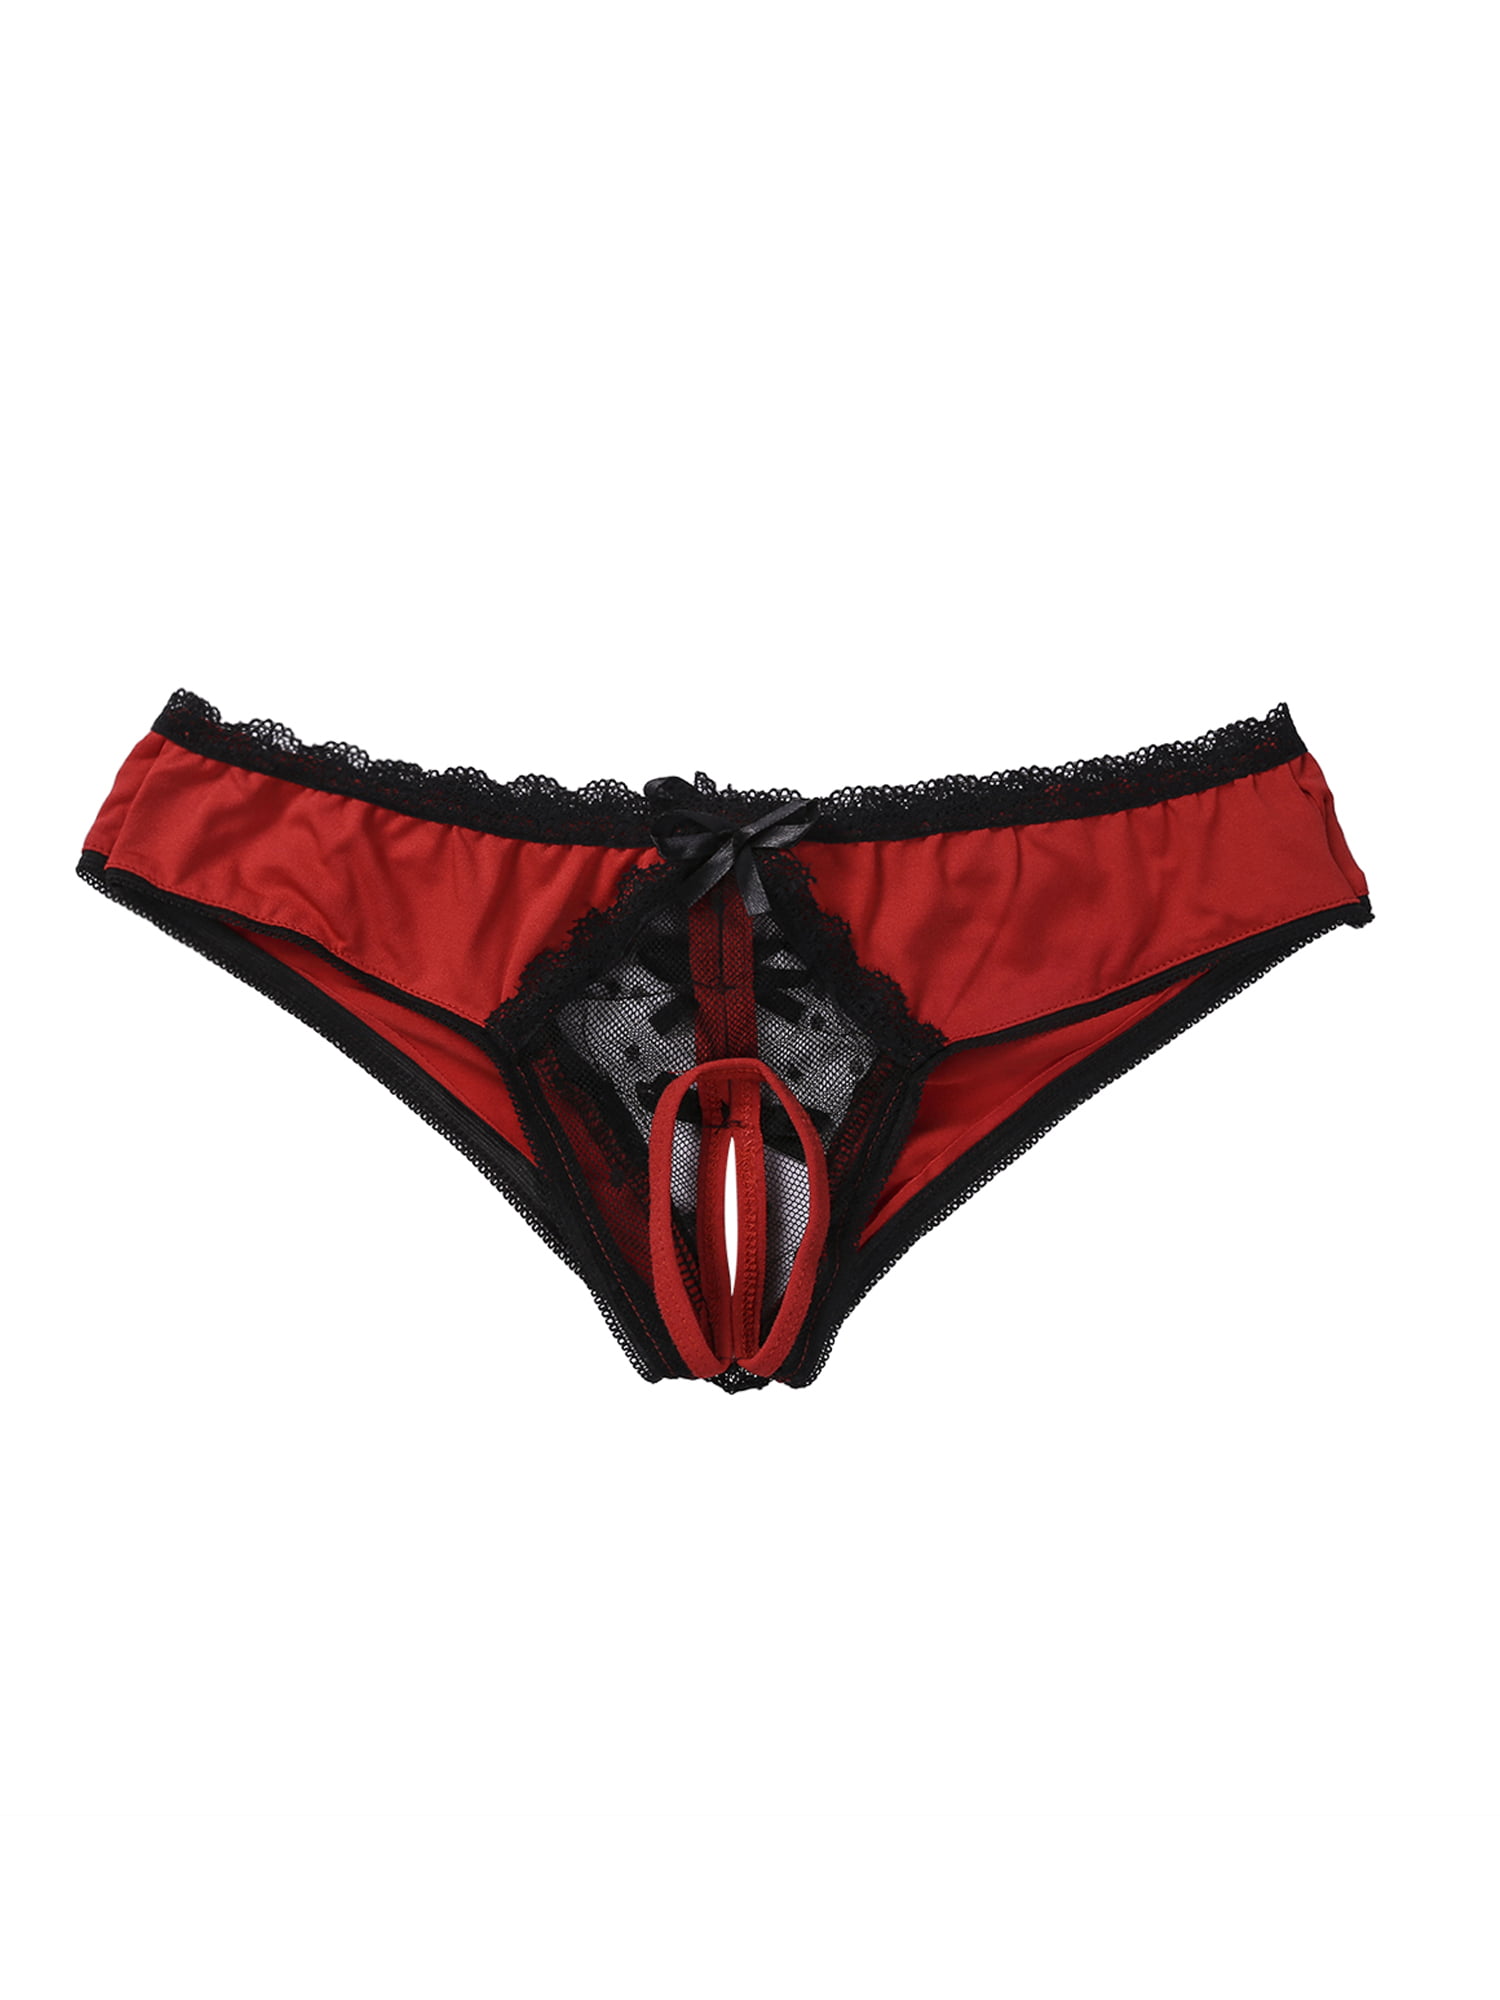 Calsunbaby Women Thongs Panties Open Crotch Crotchless Underwear Night  G-string XXL 